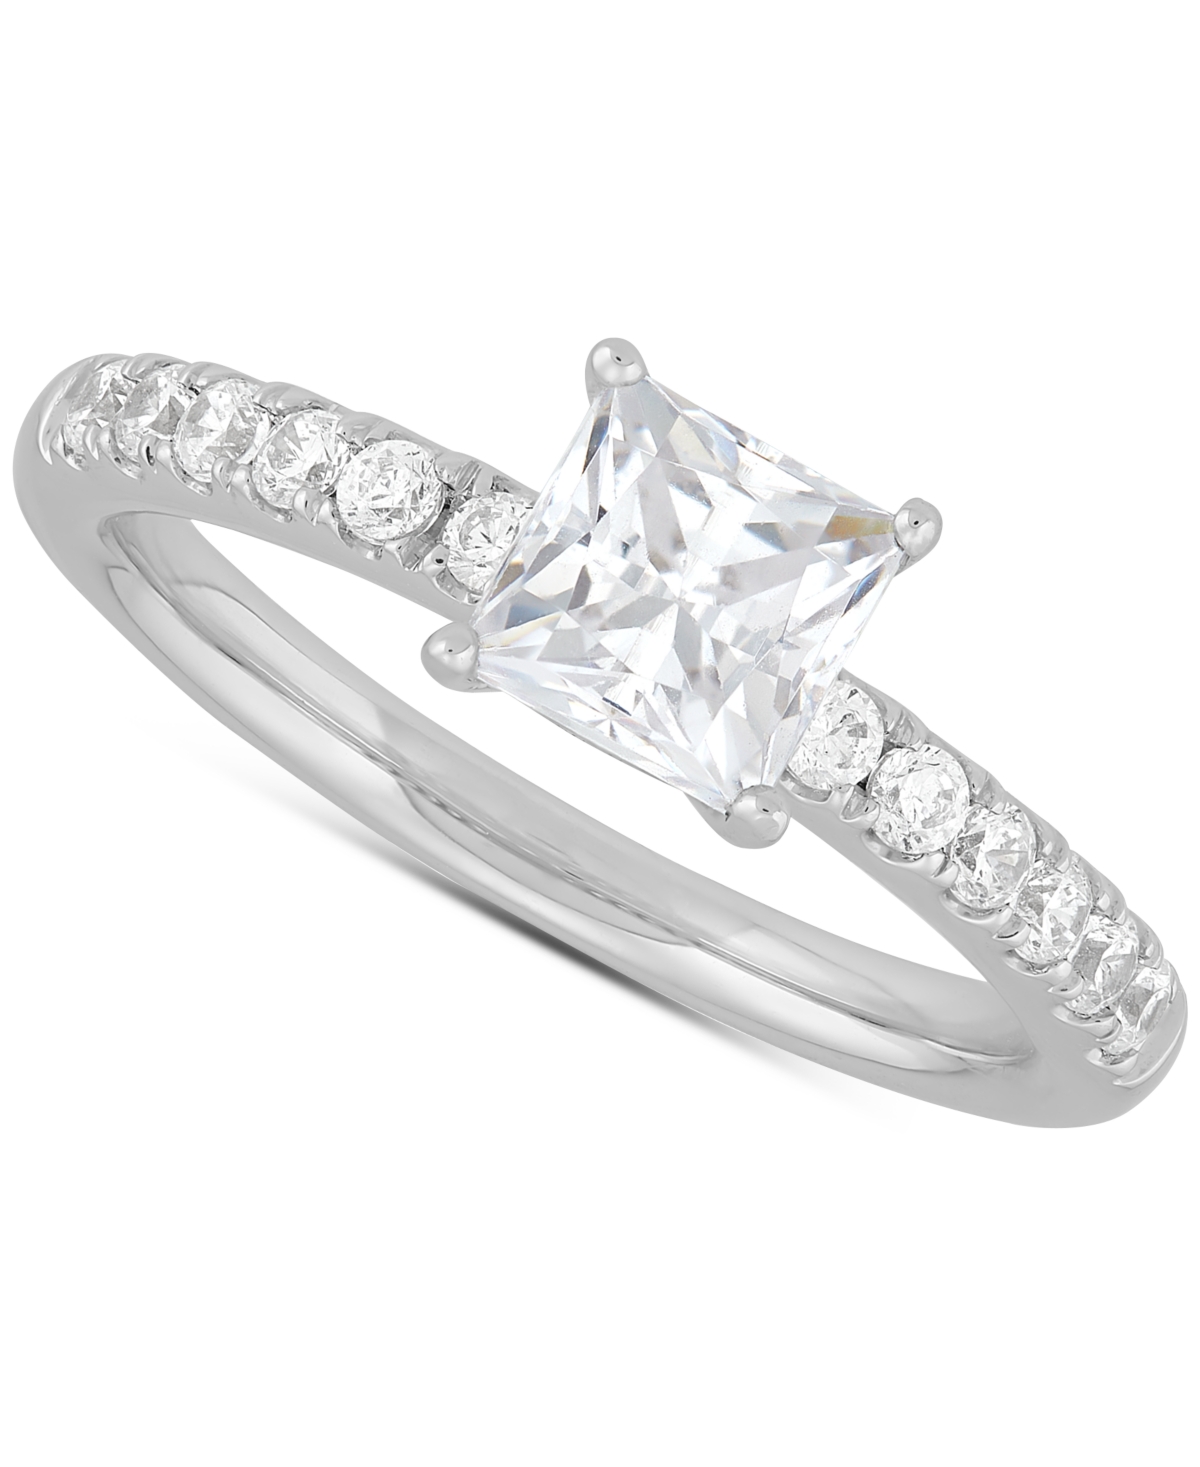 Igi Certified Lab Grown Diamond Ring (1-1/4 ct. t.w.) in 14k White Gold - White Gold